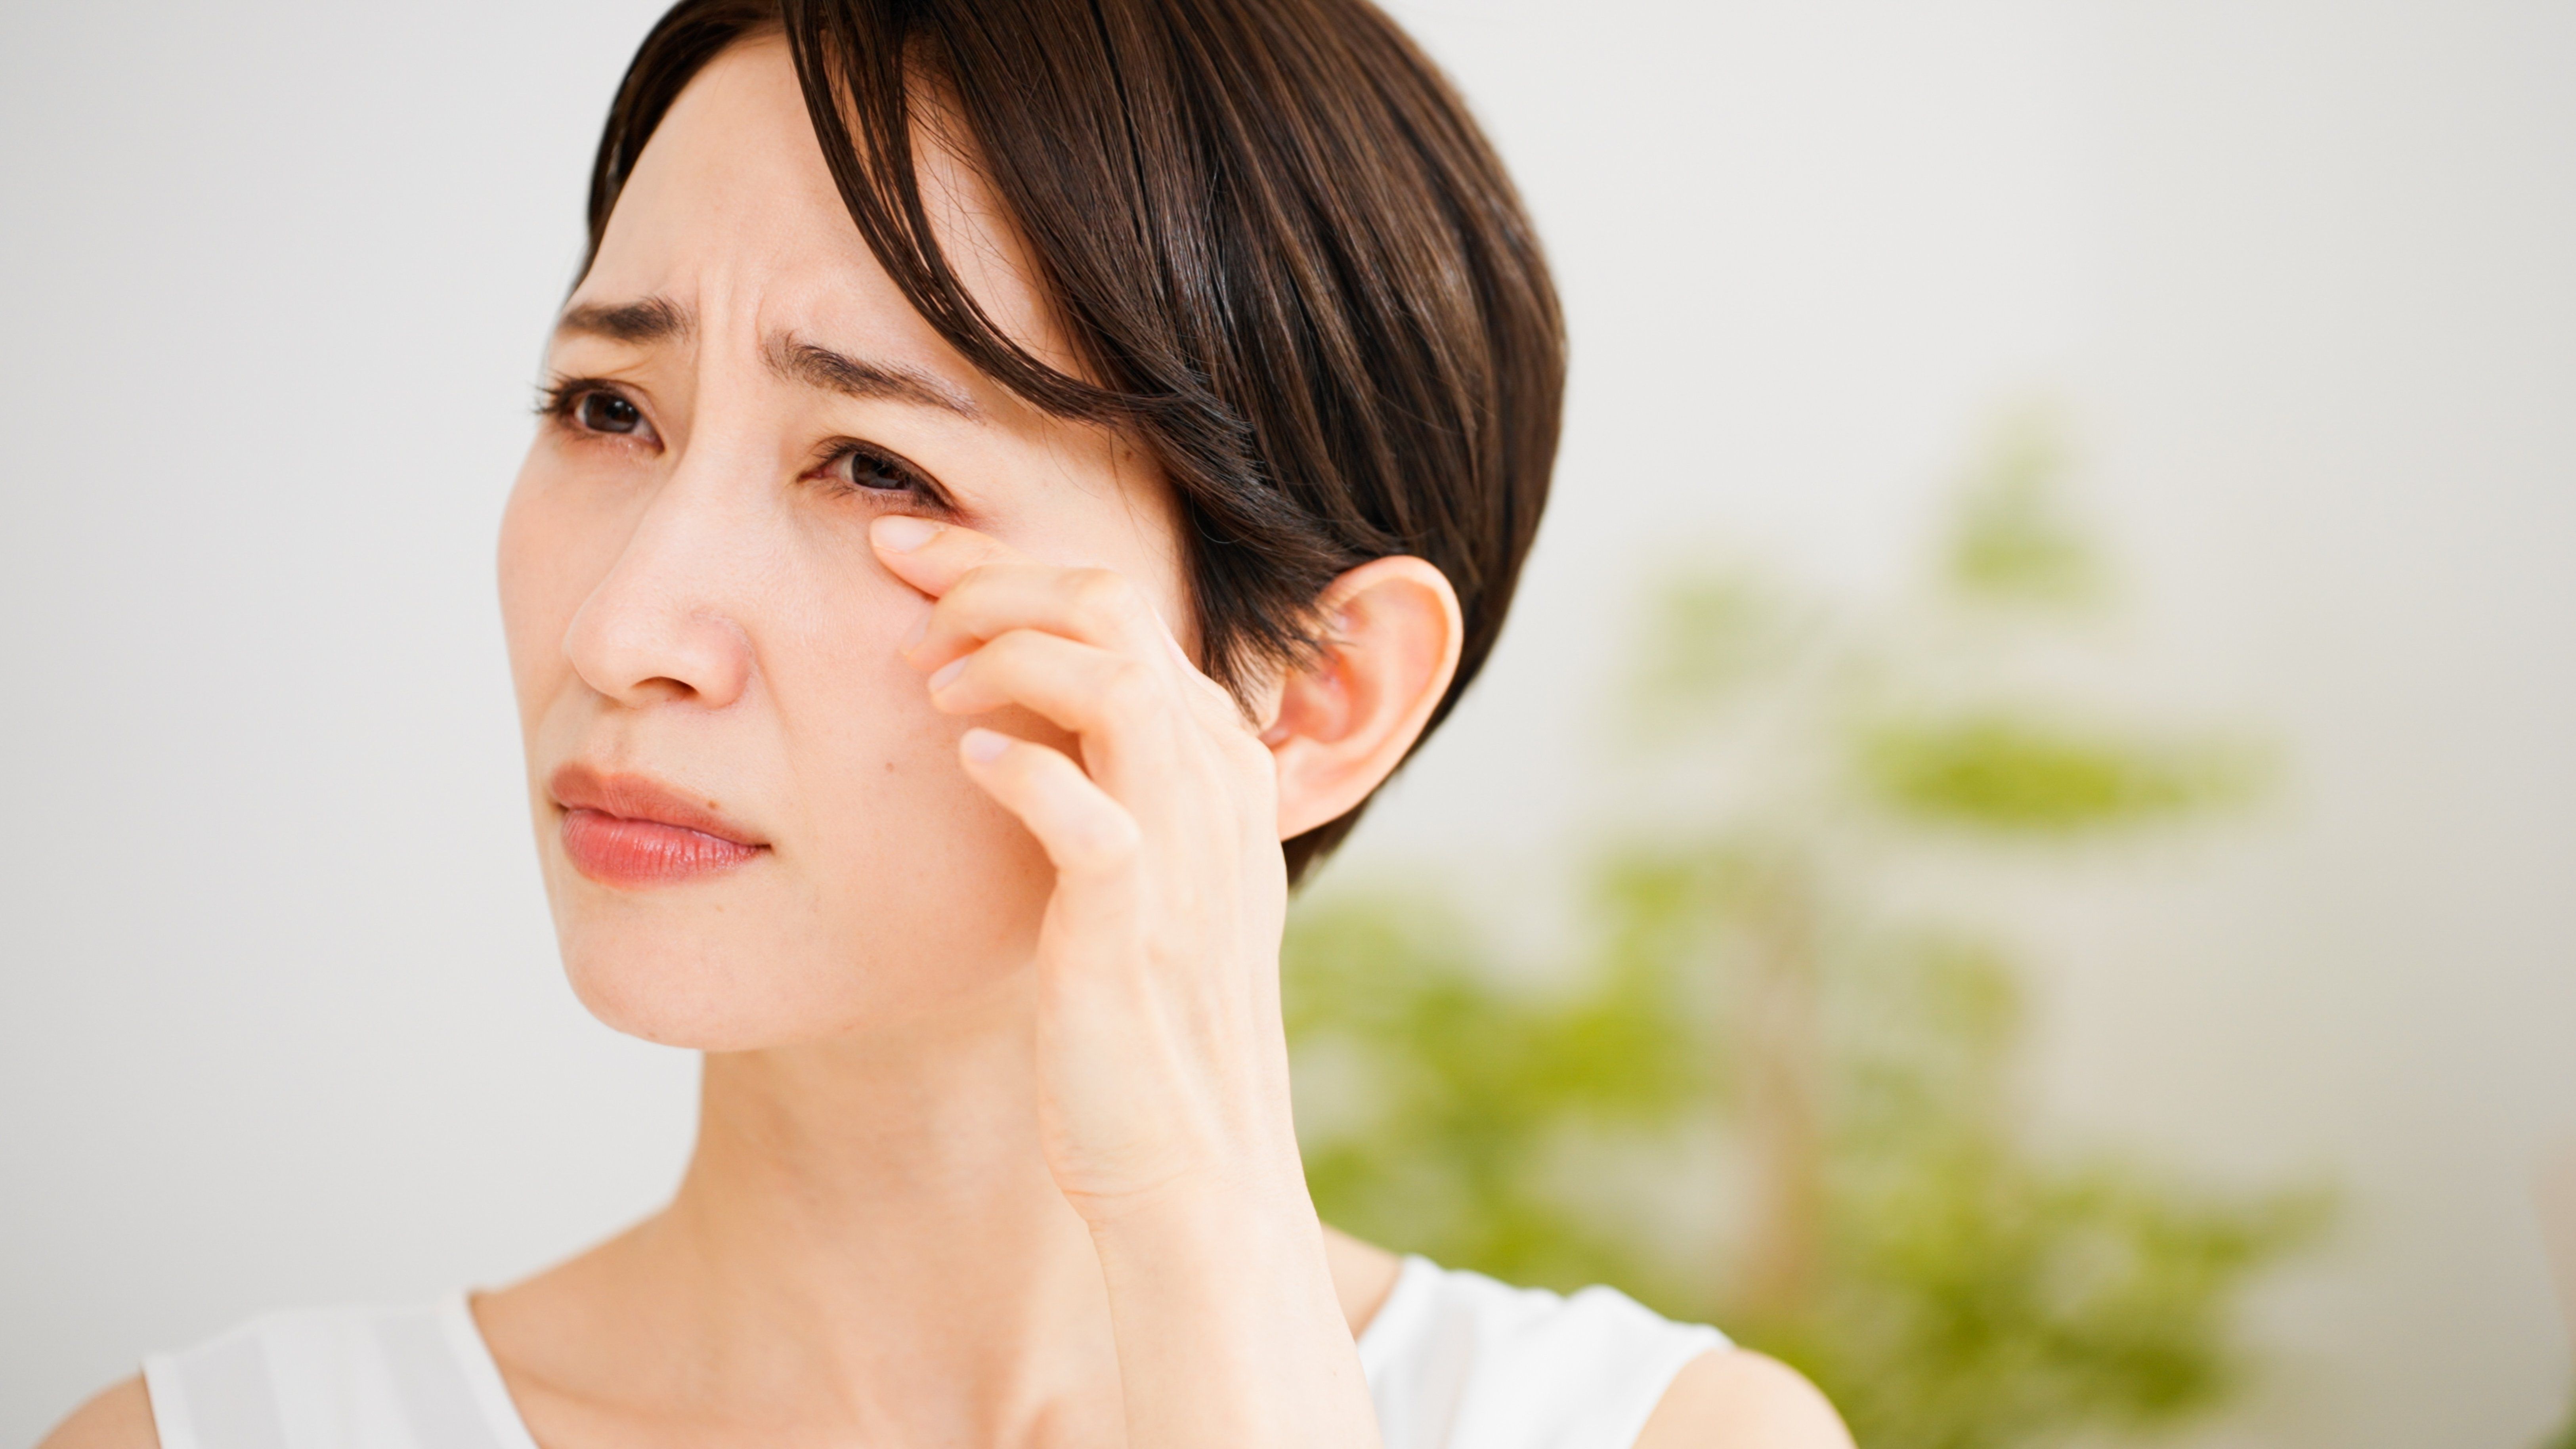 Do You Have Dry Eye or Seasonal Allergies?